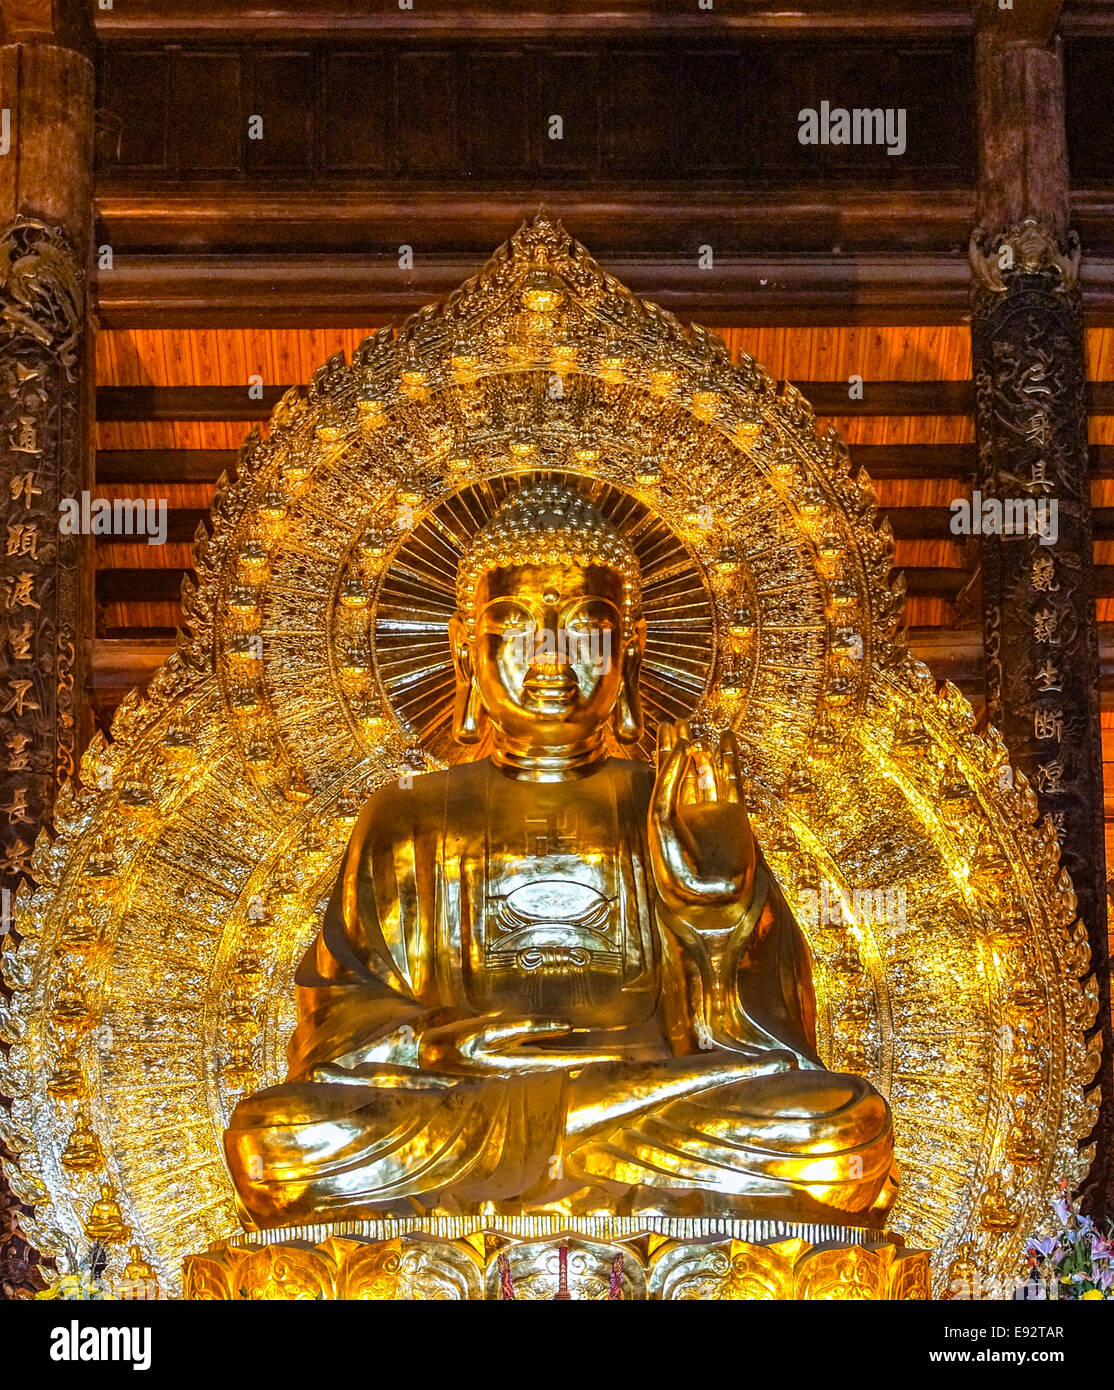 Framed giant golden Buddha image greets visitors. Stock Photo